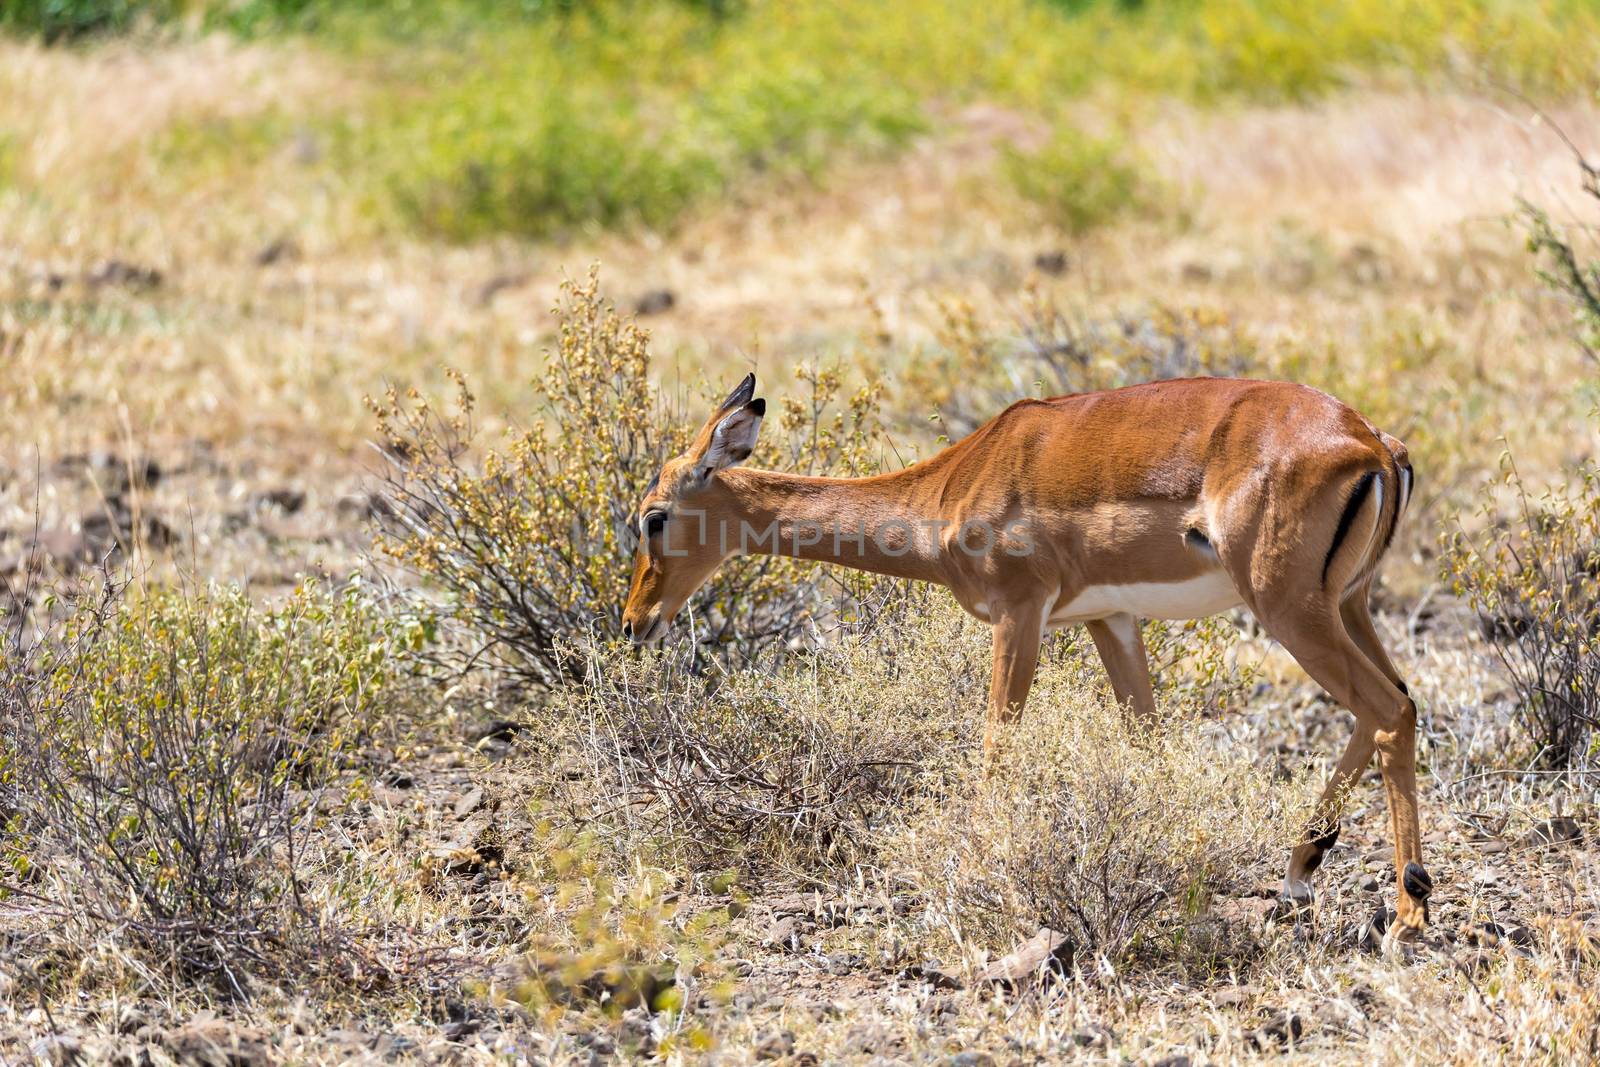 The Grant Gazelle grazes in the vastness of the Kenyan savannah